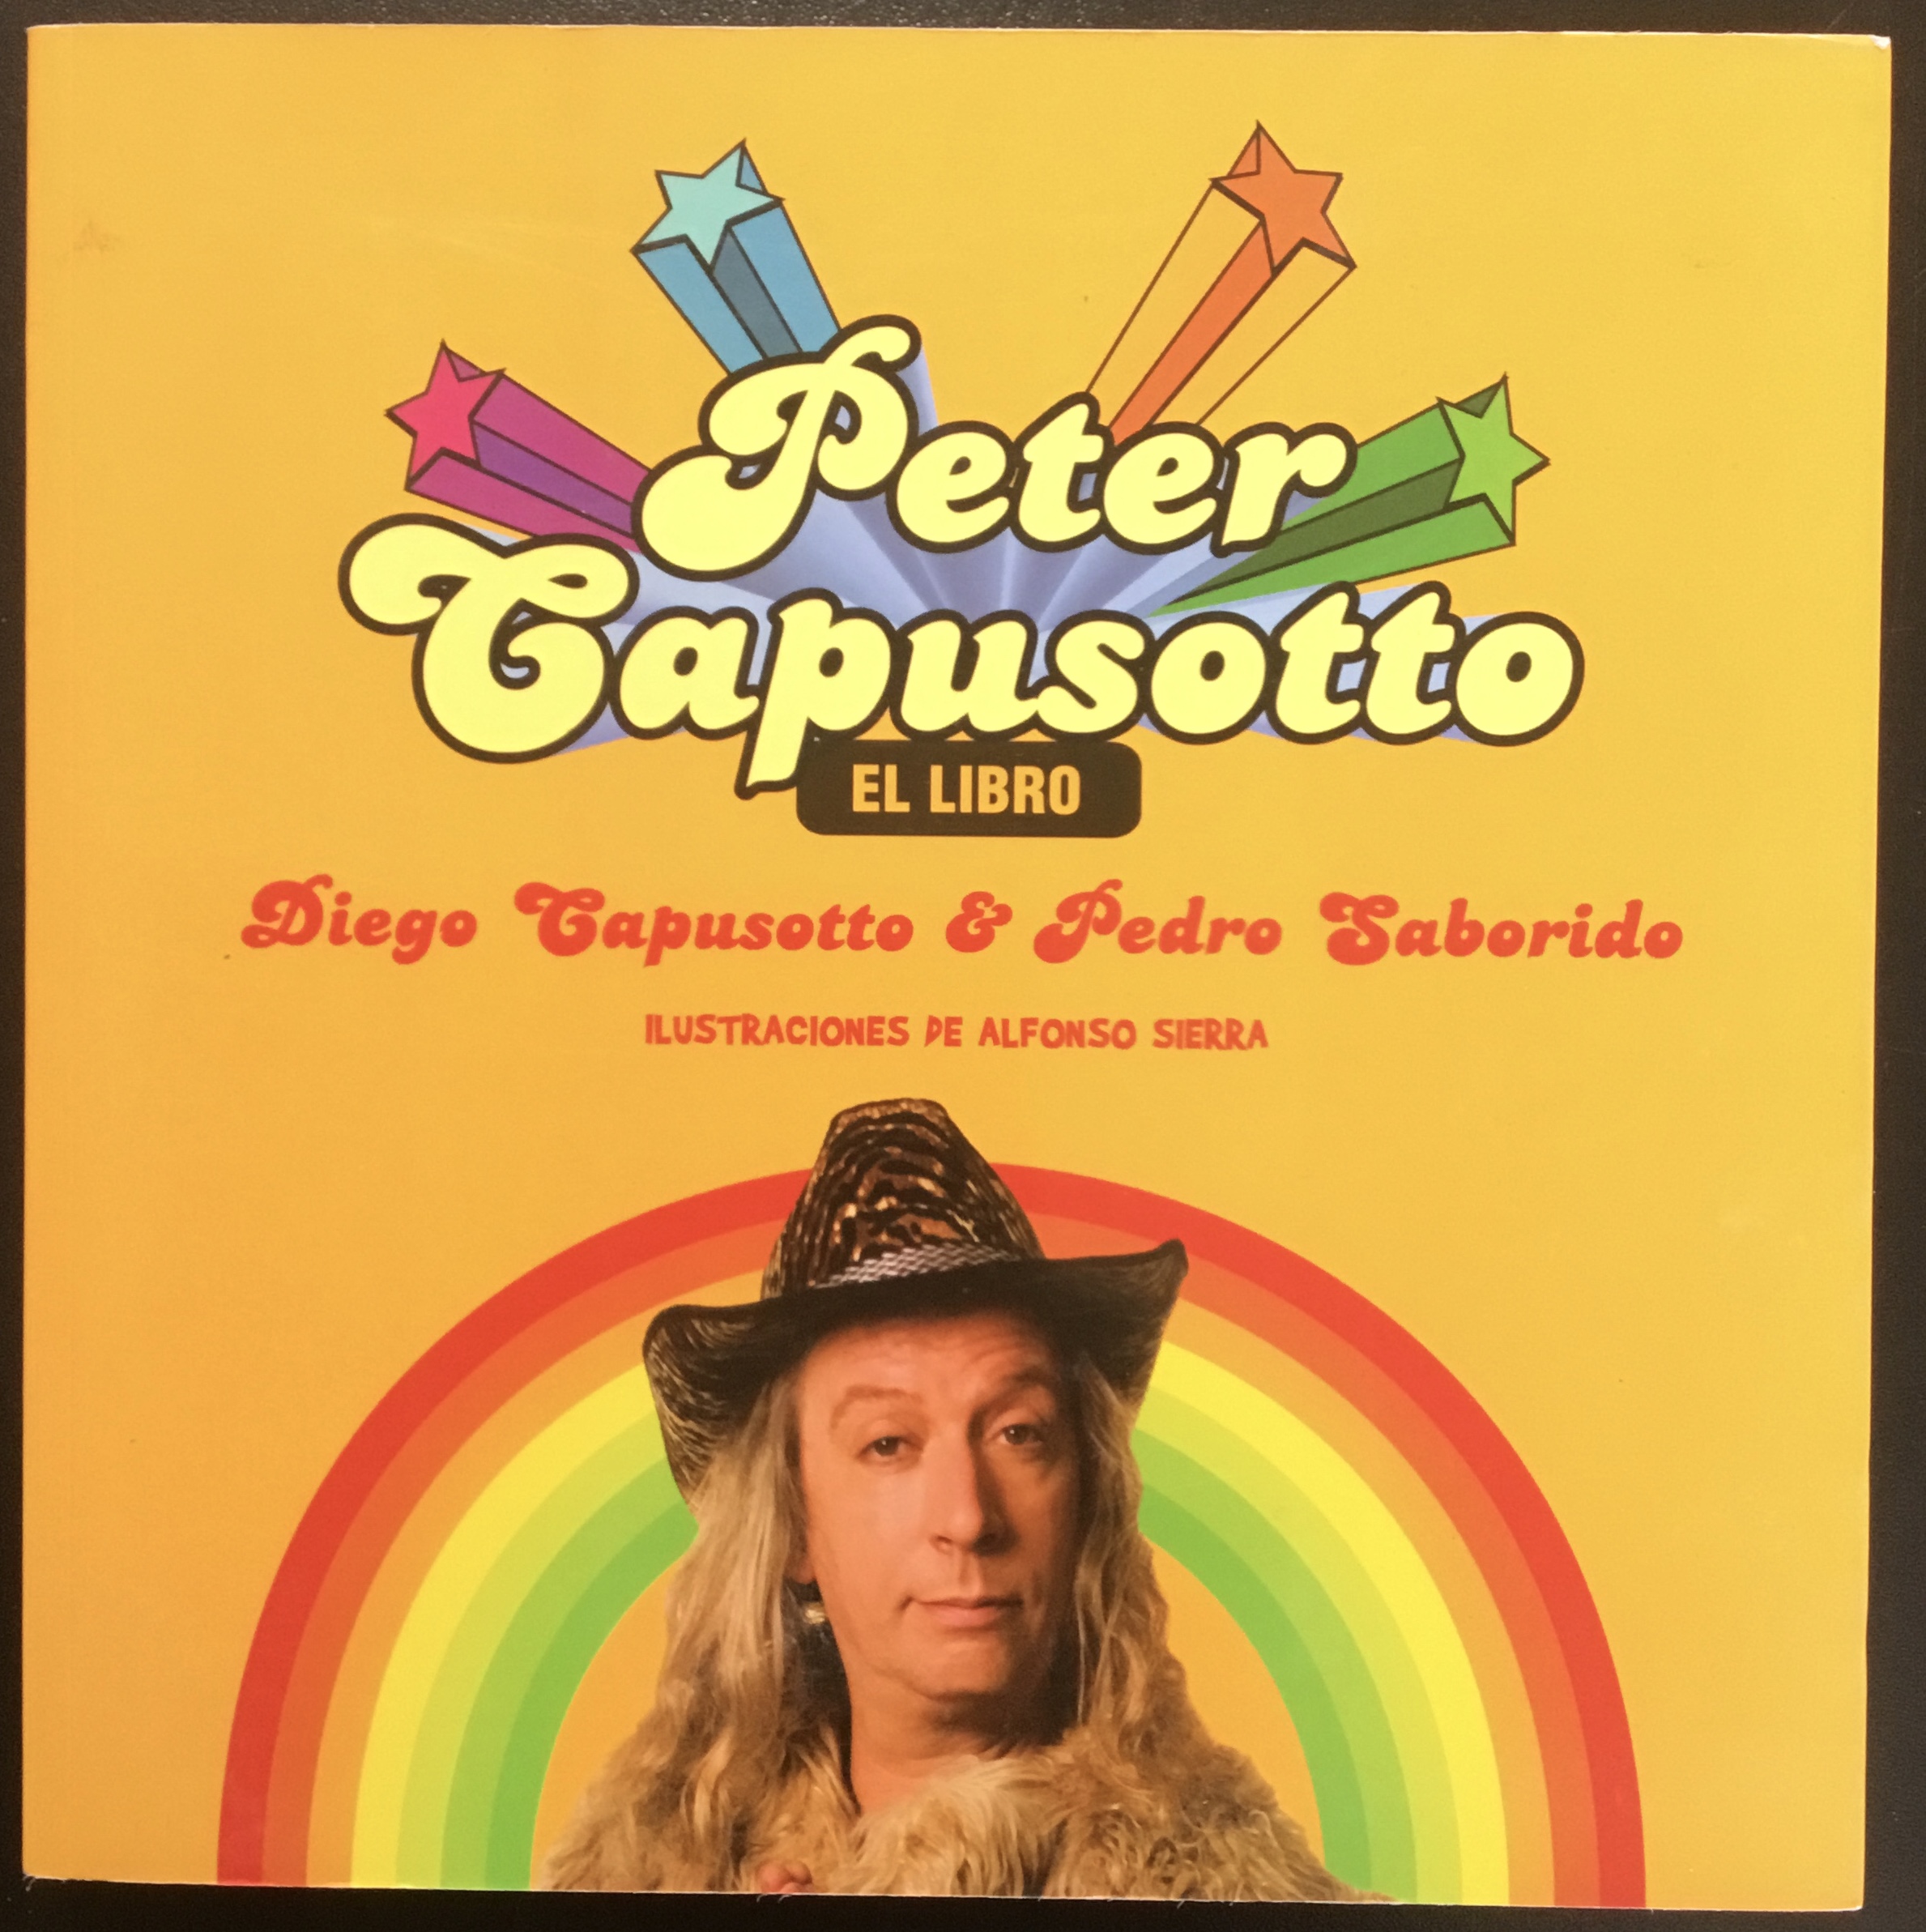 Libro Peter Capussotto